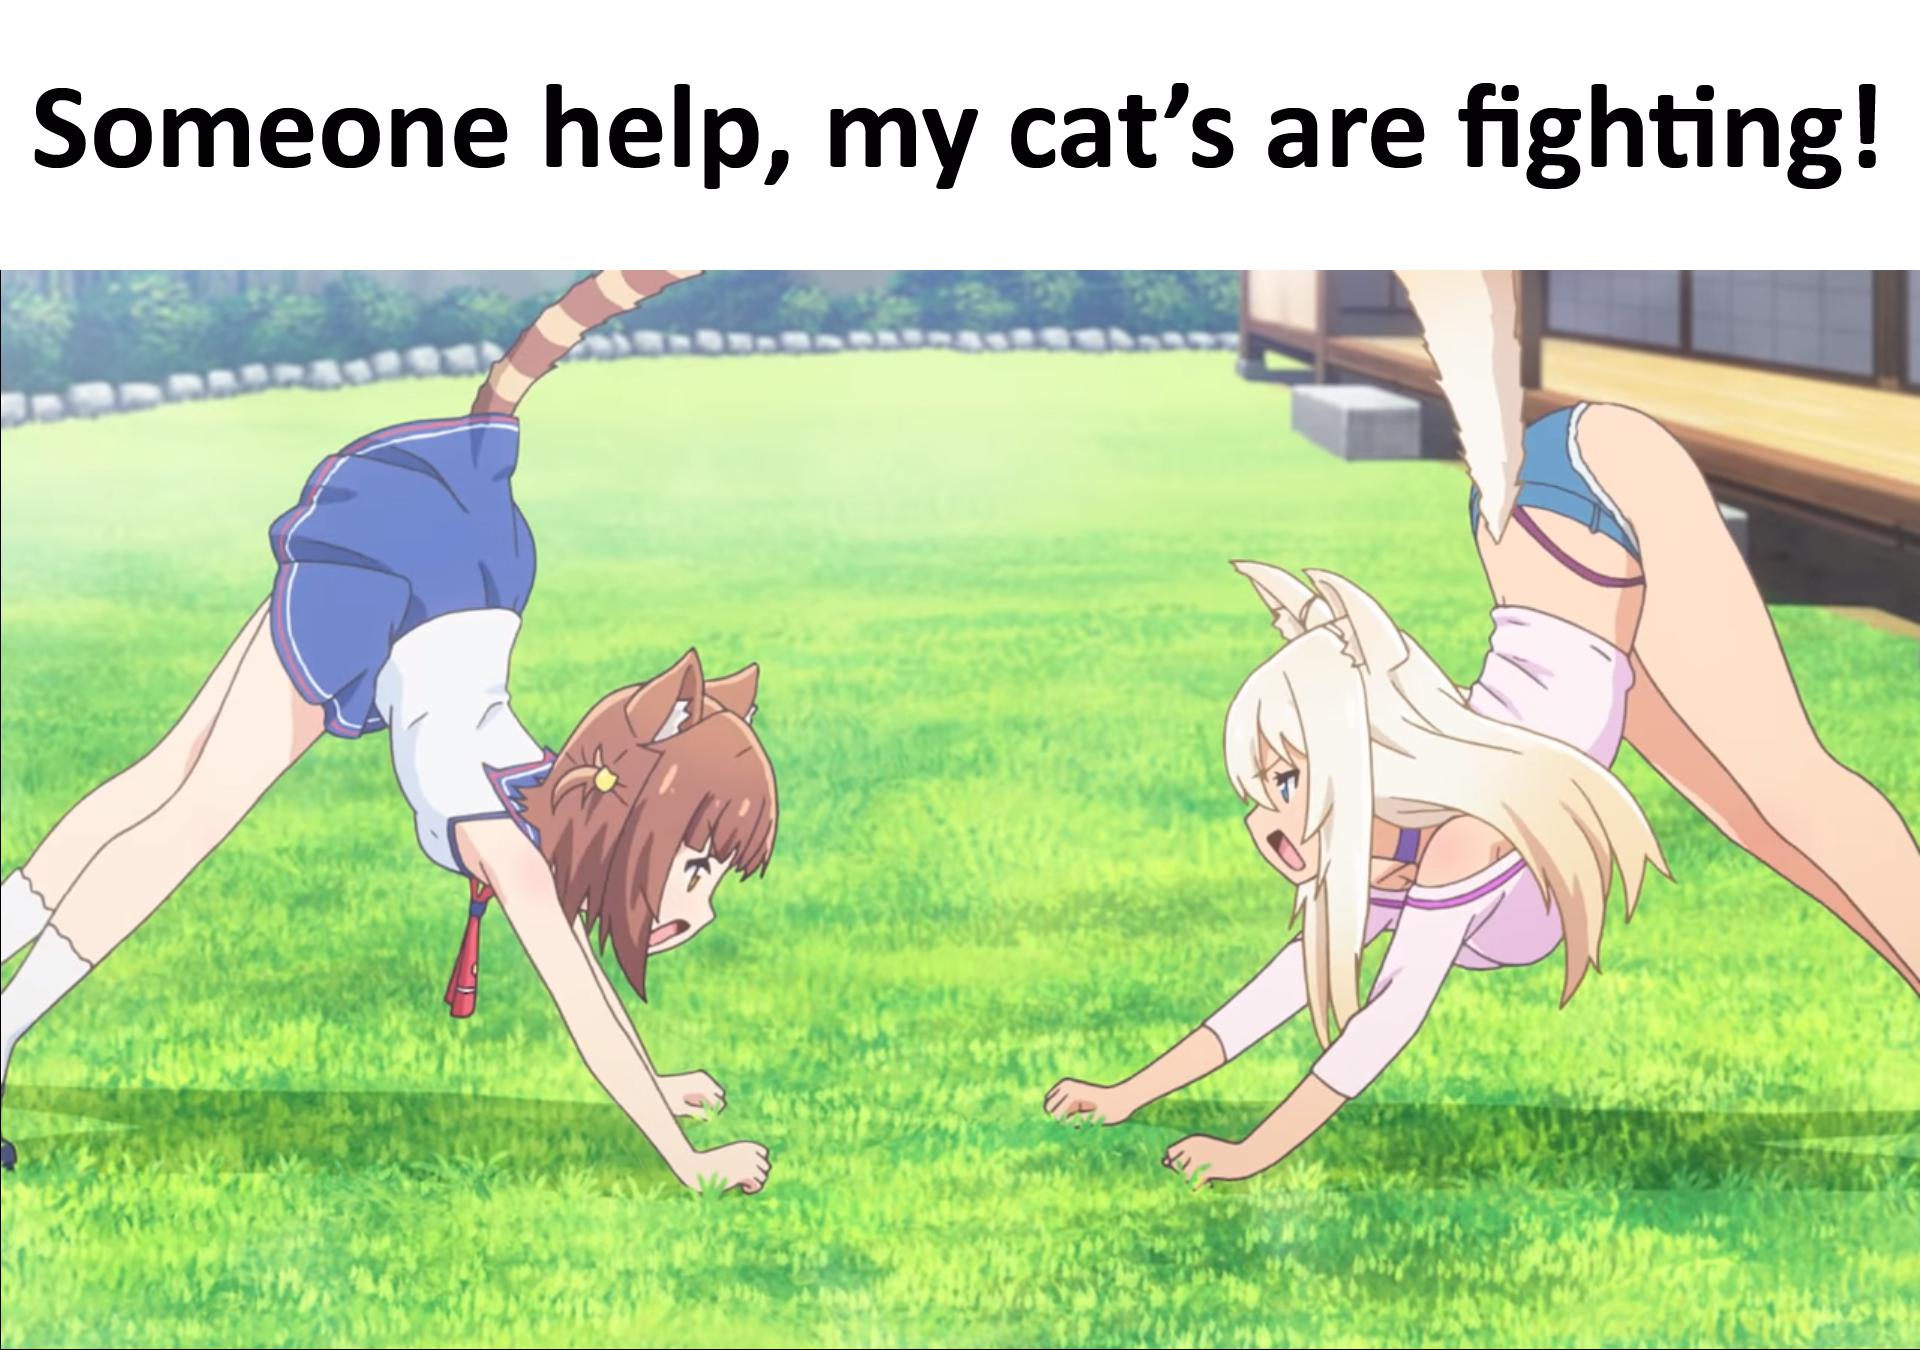 Cat chubby fighting girl